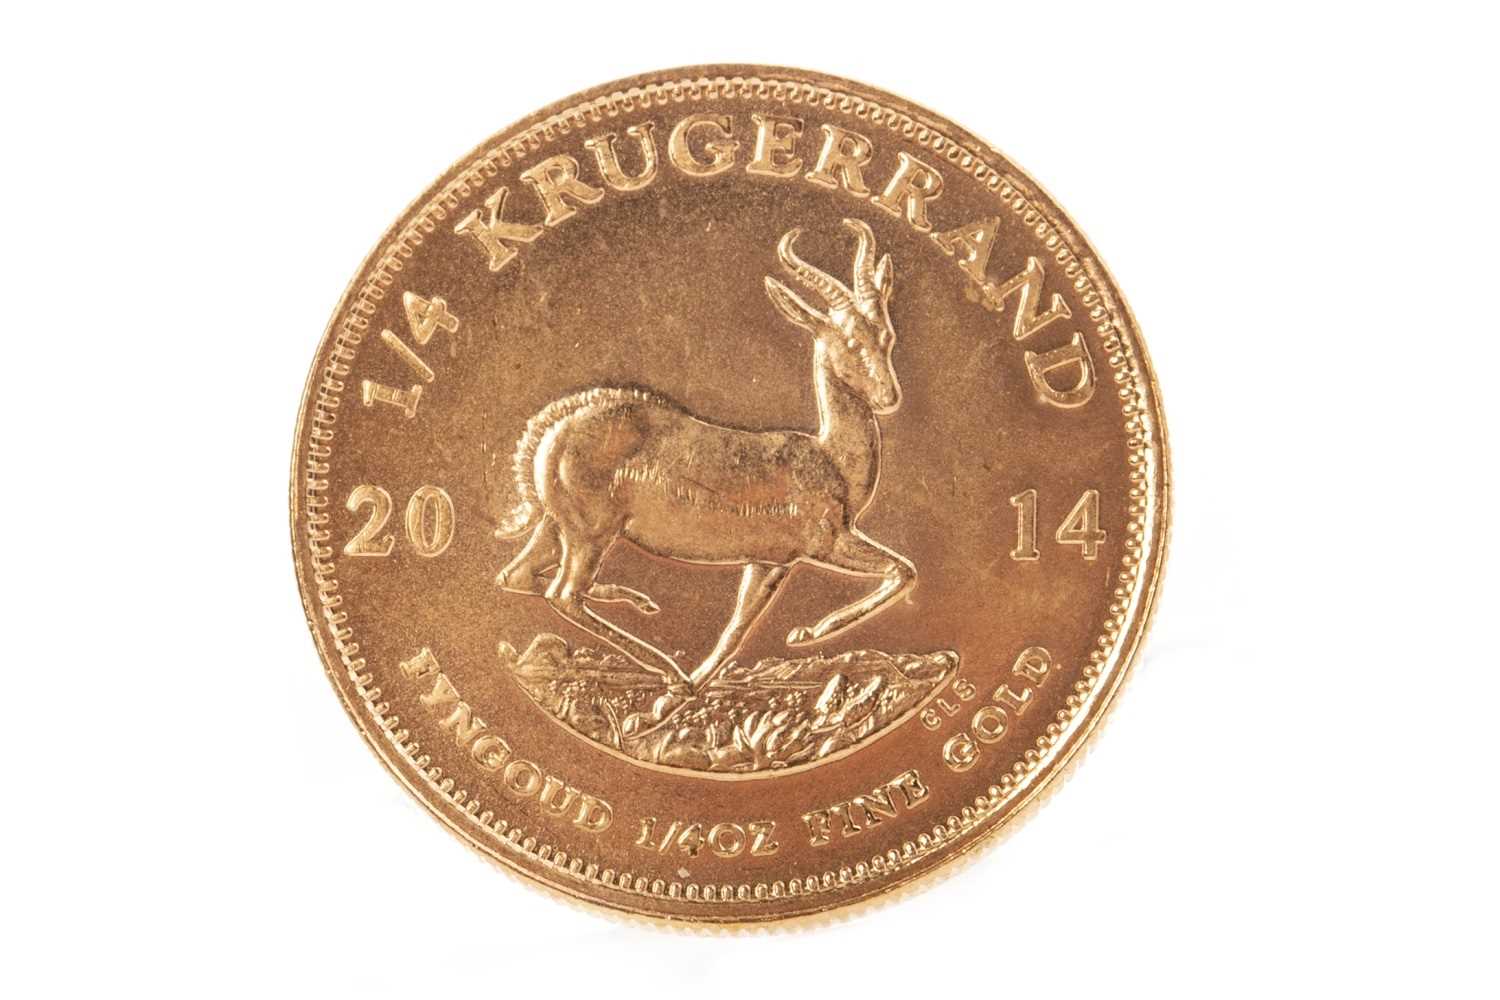 Lot 573 - A GOLD QUARTER KRUGERRAND COIN, 2014